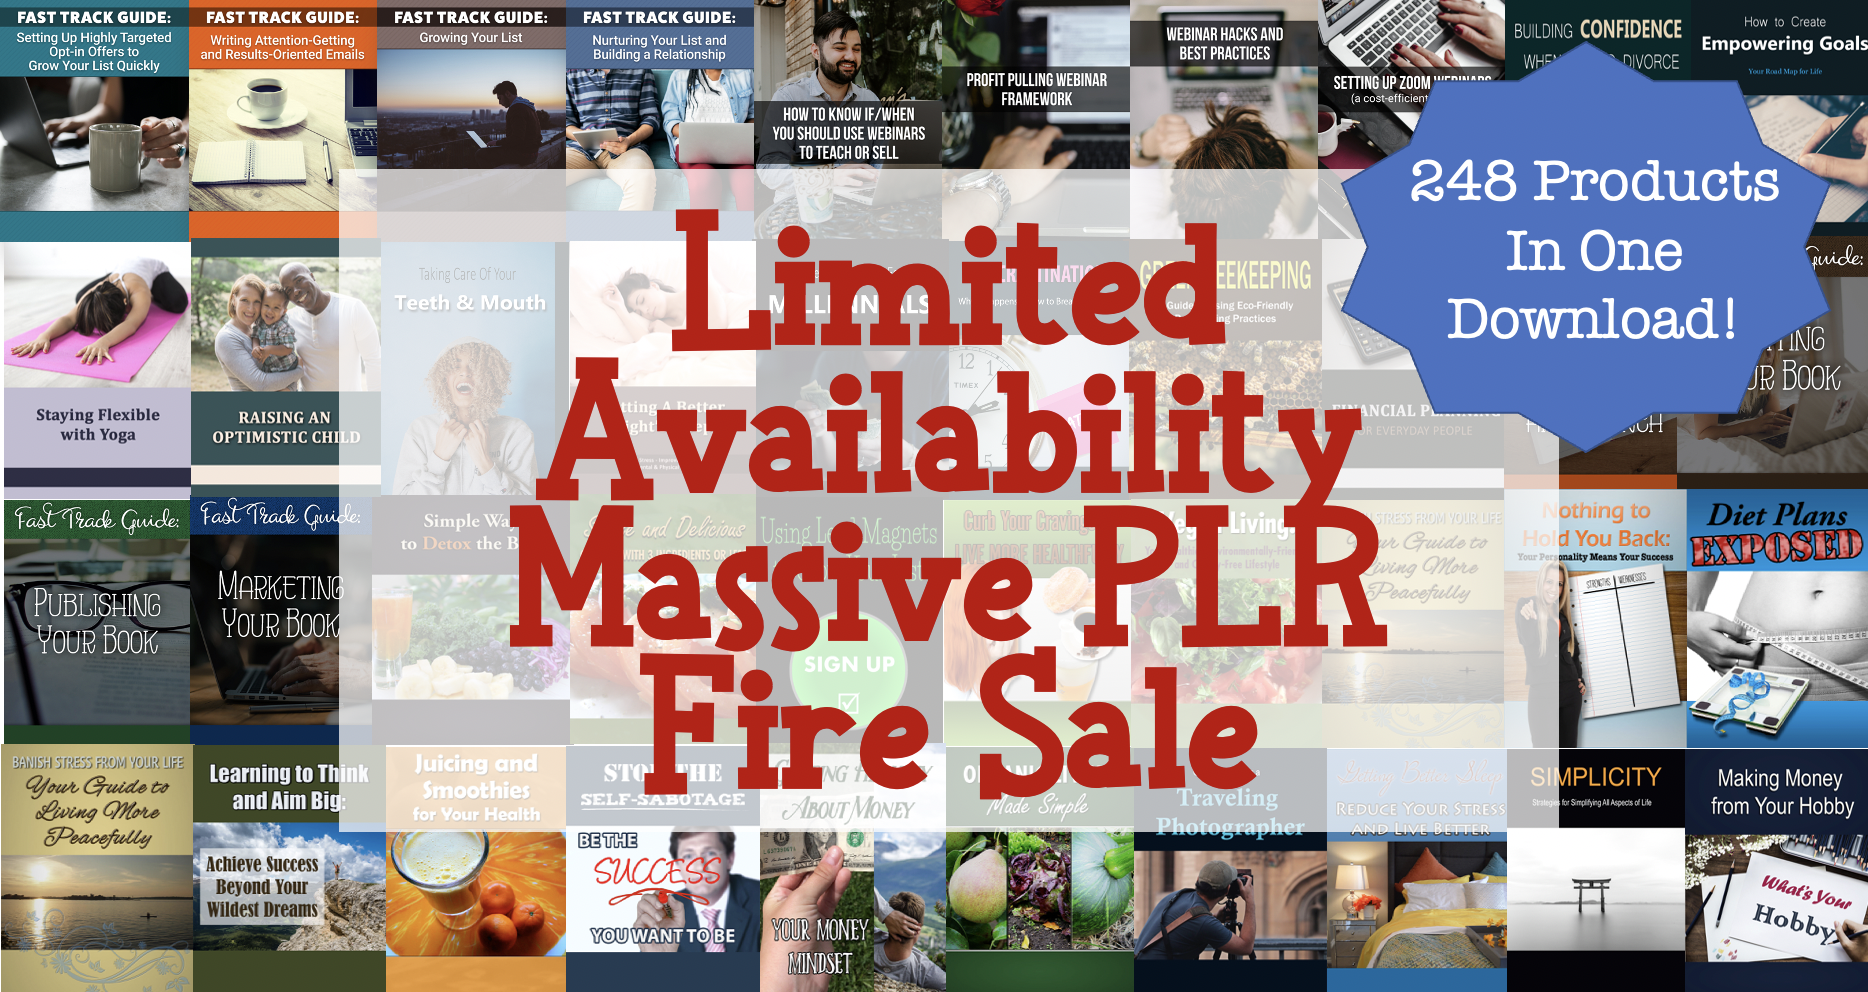 Massive PLR Fire Sale - 248 PLR Products